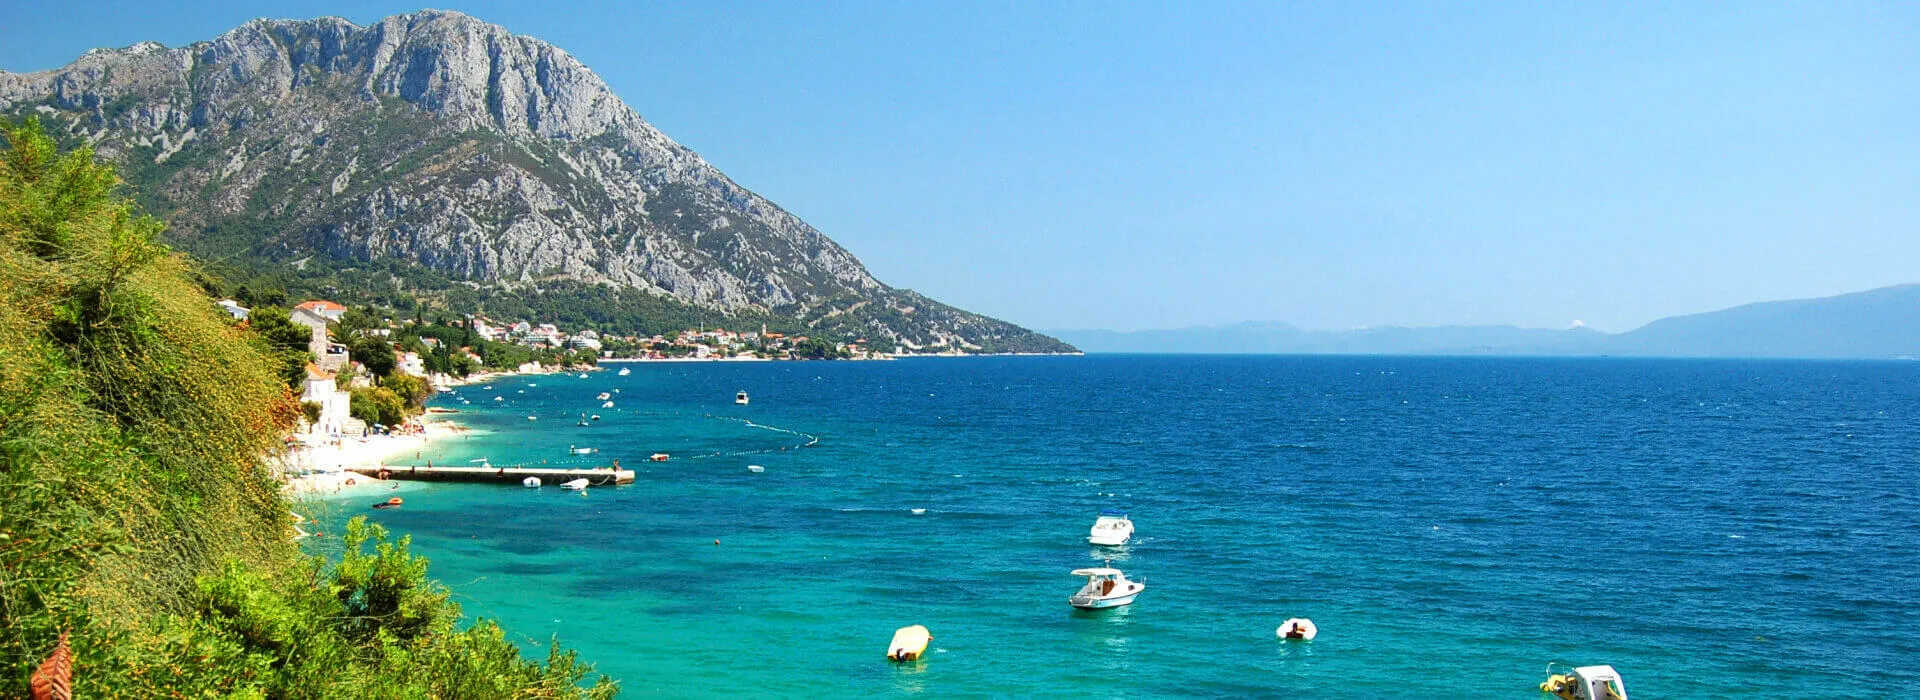 Urlaub in Kroatien background image